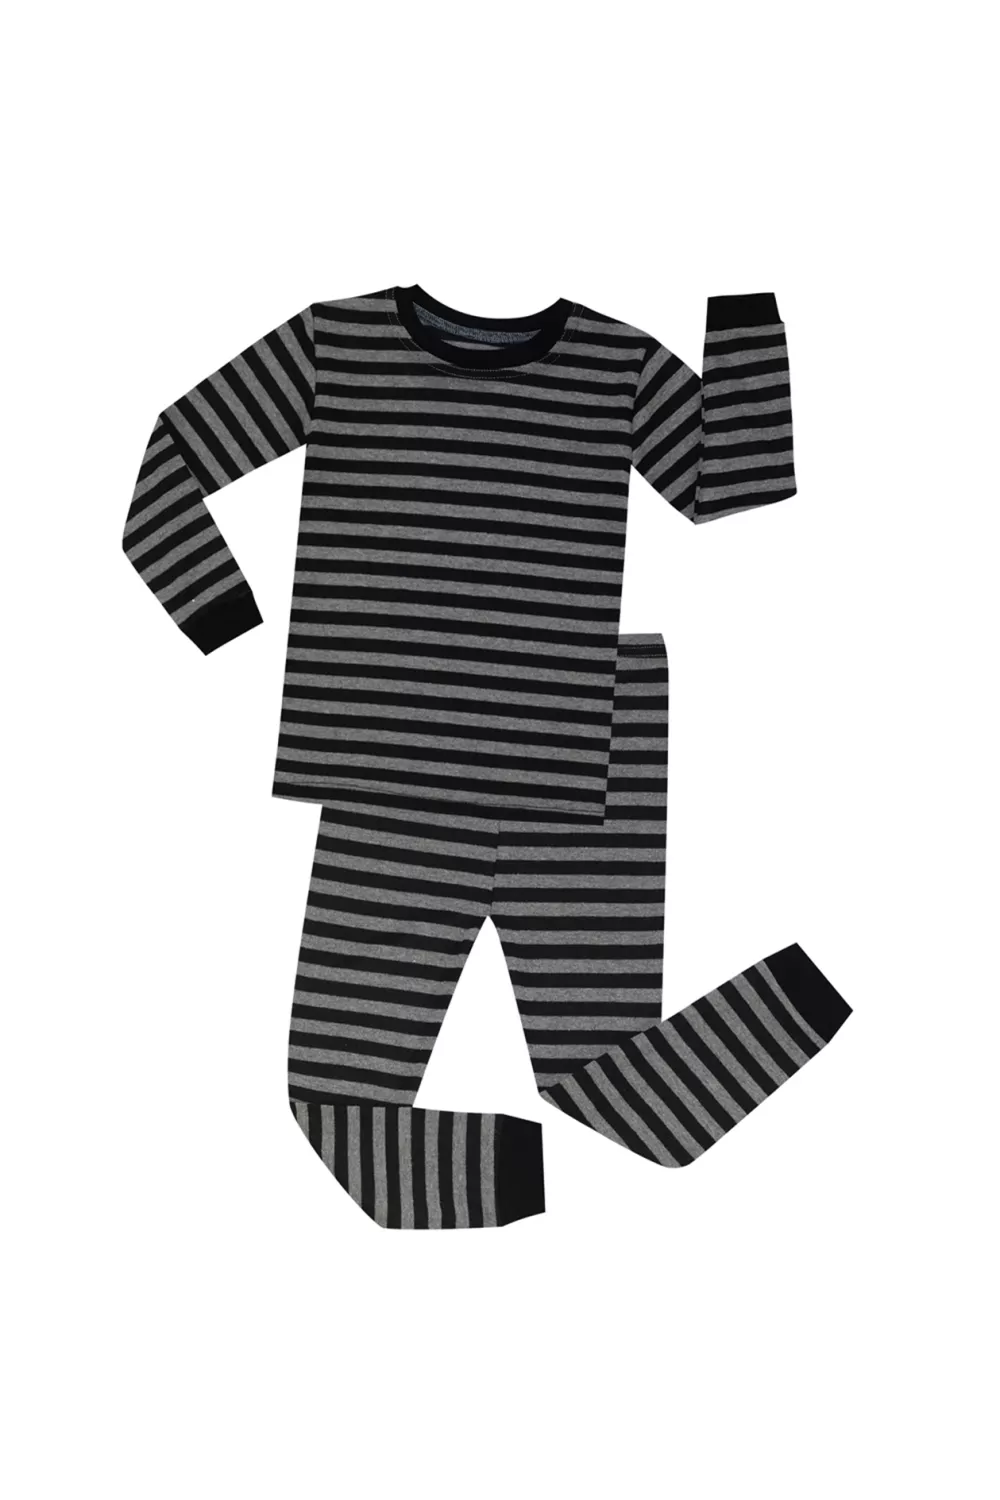 KAC Children's Cotton Full Stripe Crew Neck Long Sleeve Pyjamas | KOODING